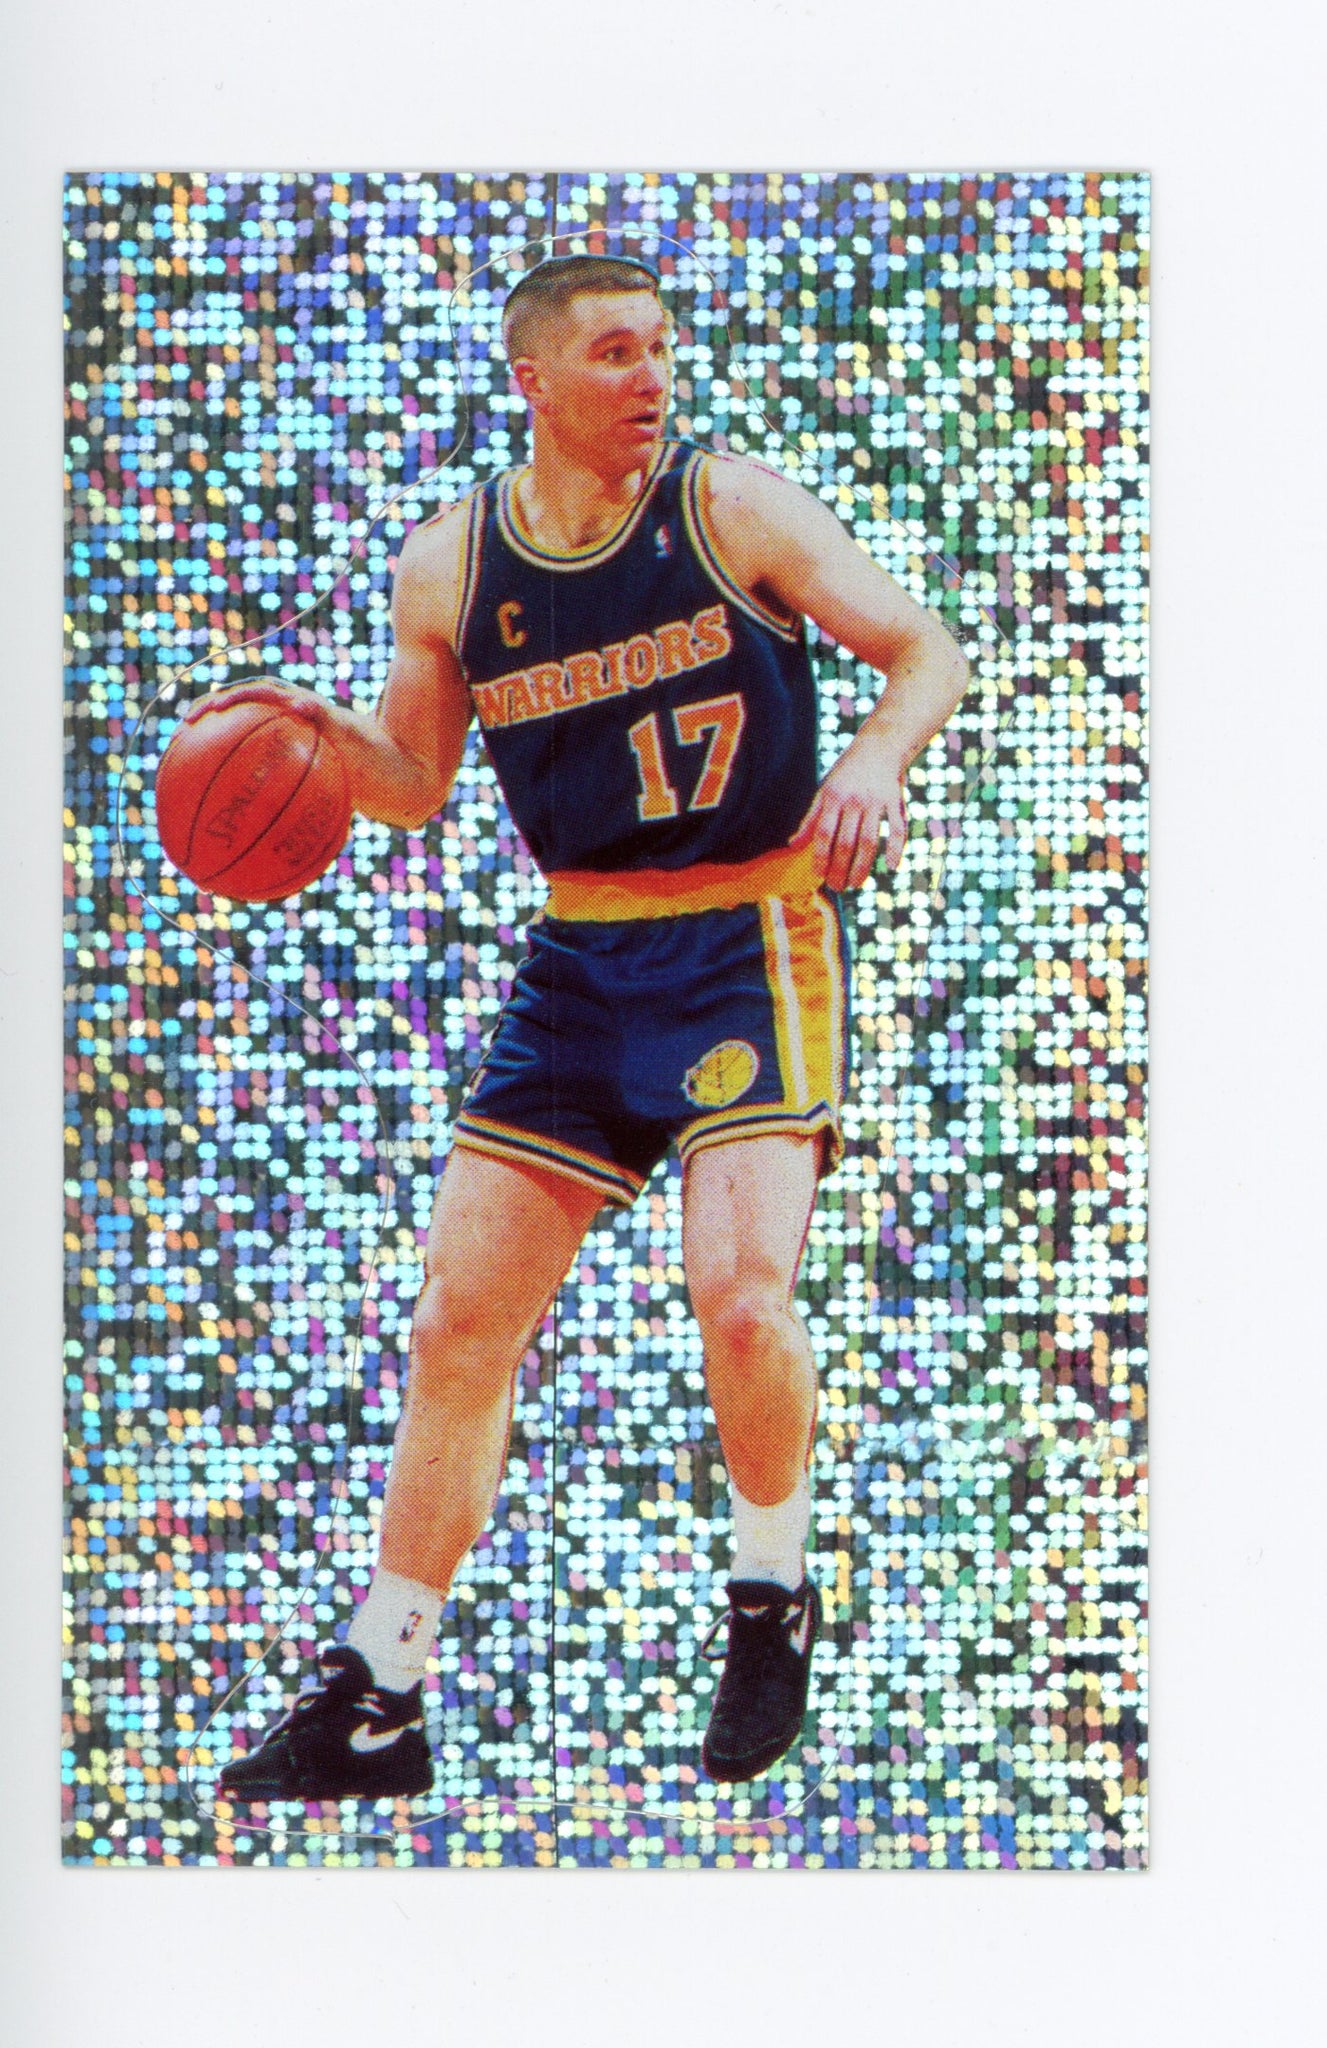 Chris Mullin Panini 1992-1993 Basketball Sticker Golden State Warriors #101